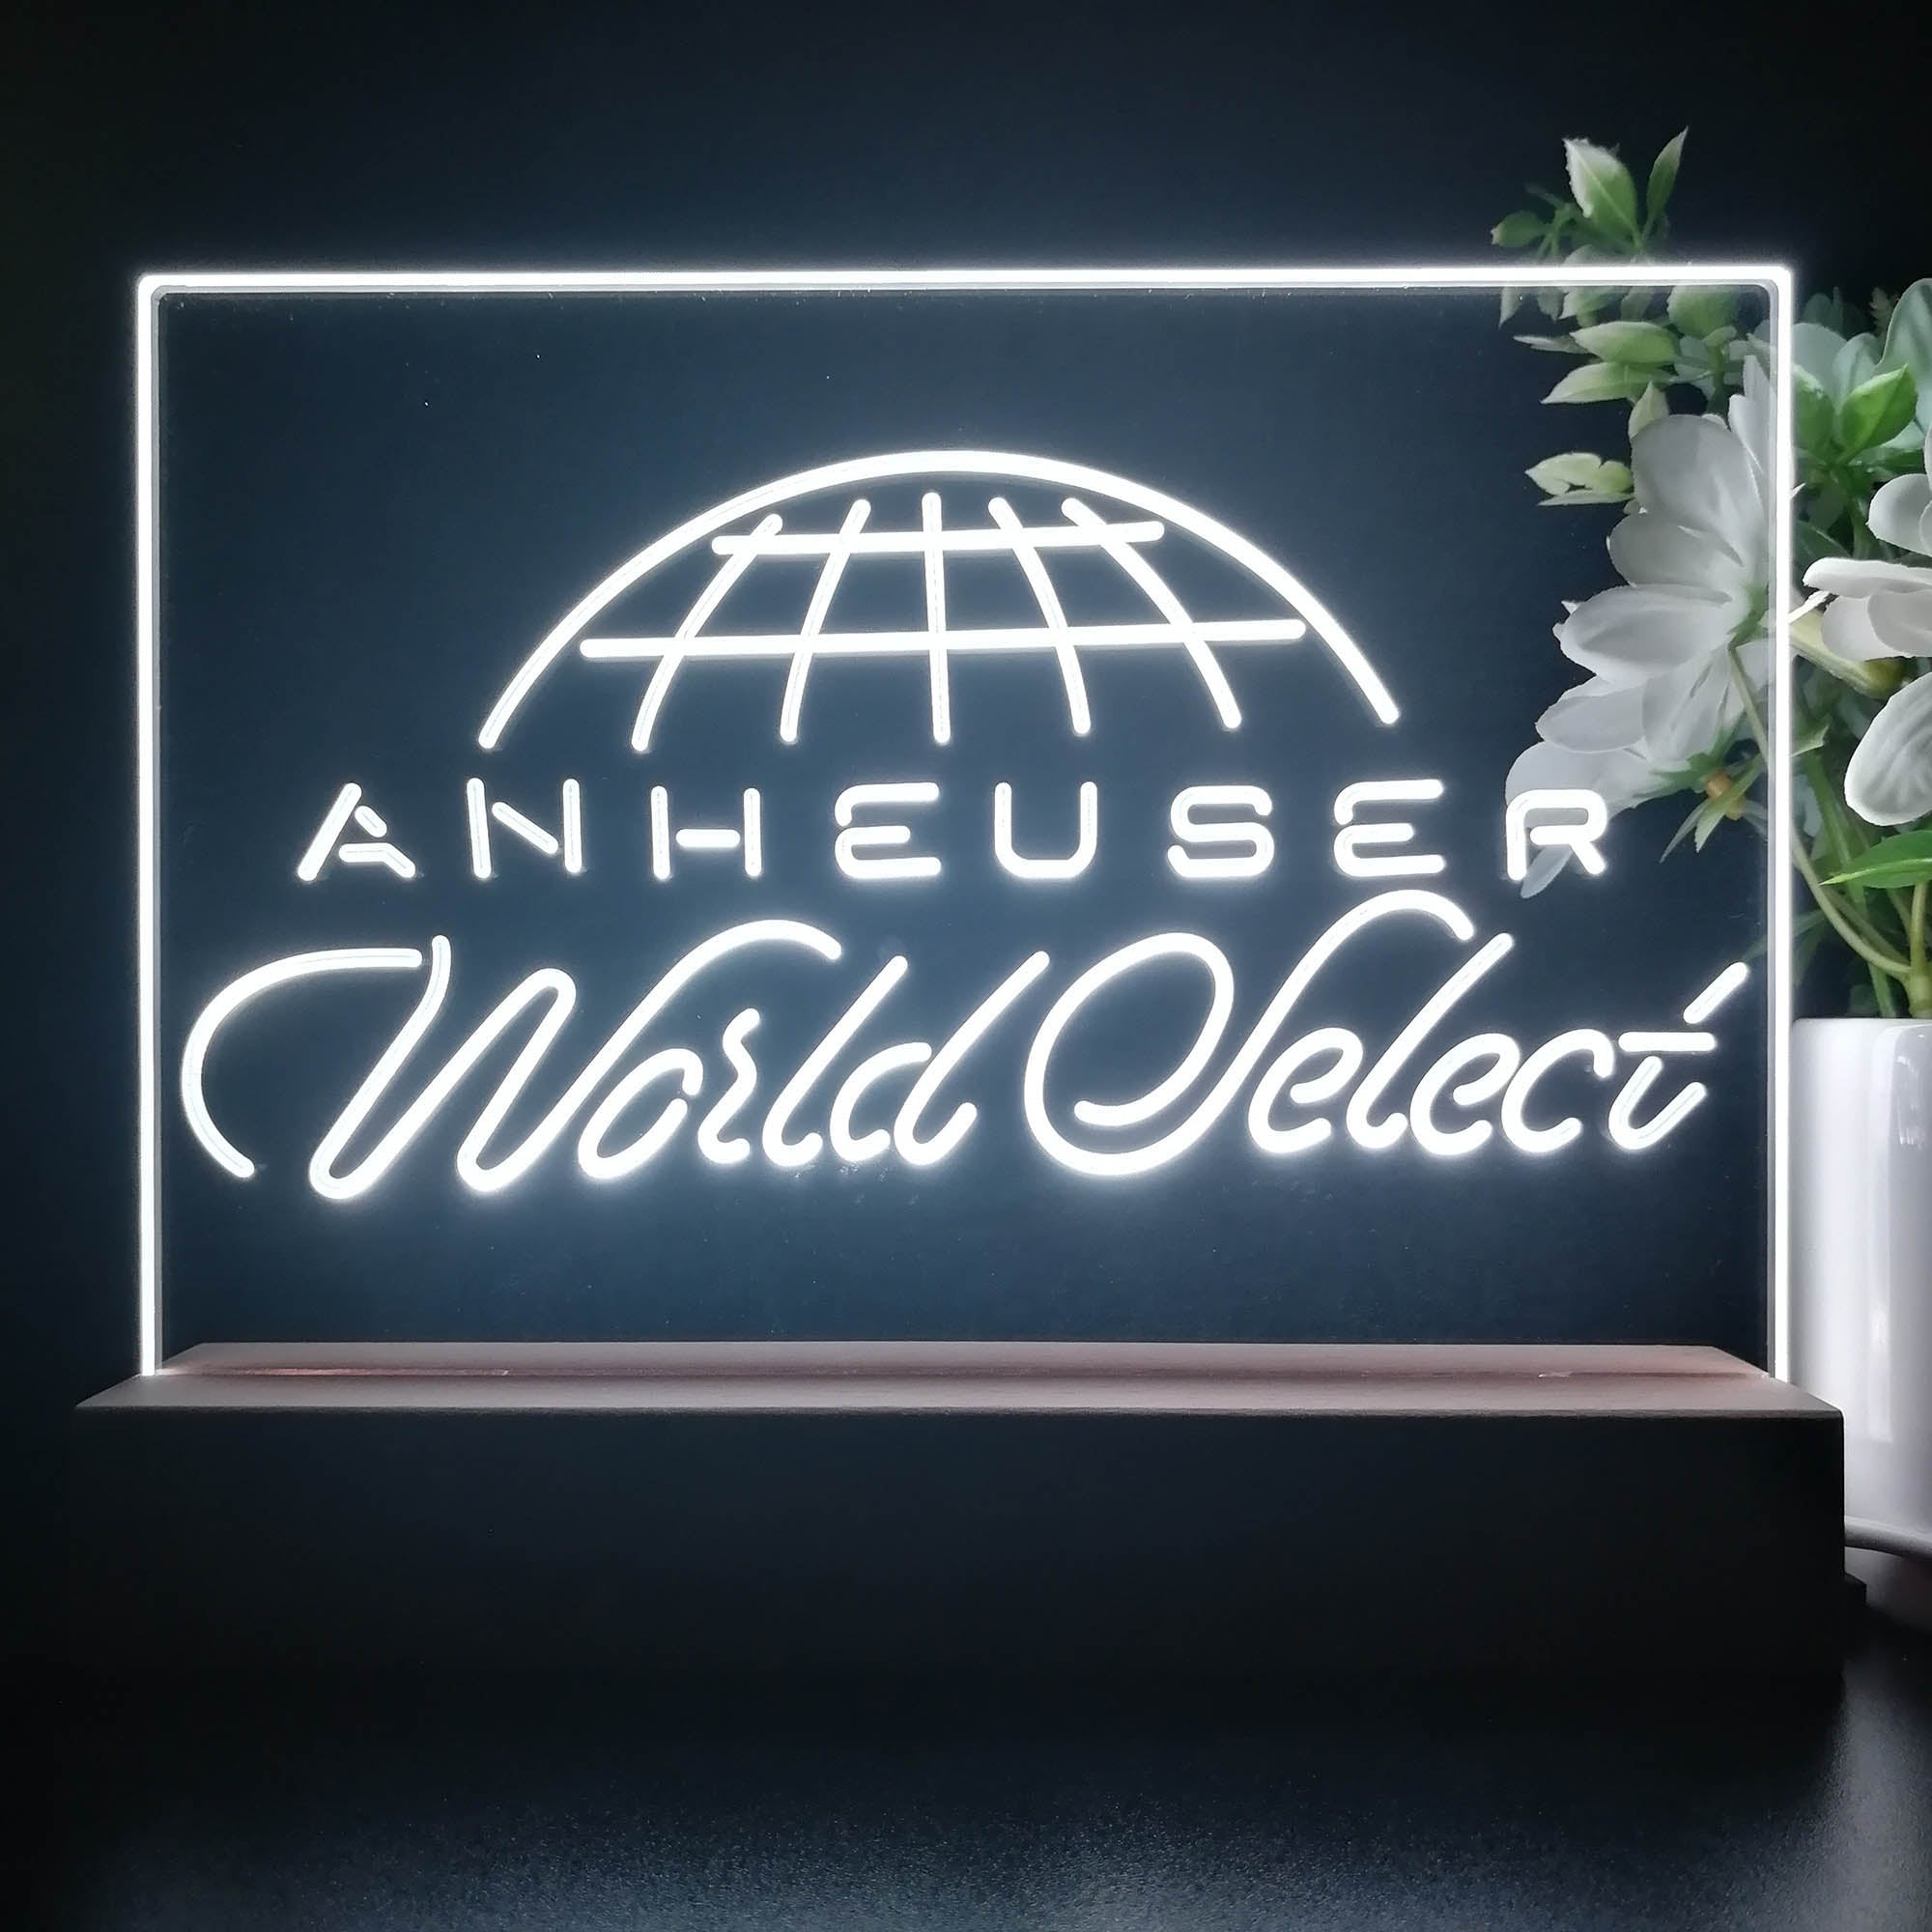 Anheuser World Select Beer Bar Neon Sign Pub Bar Lamp